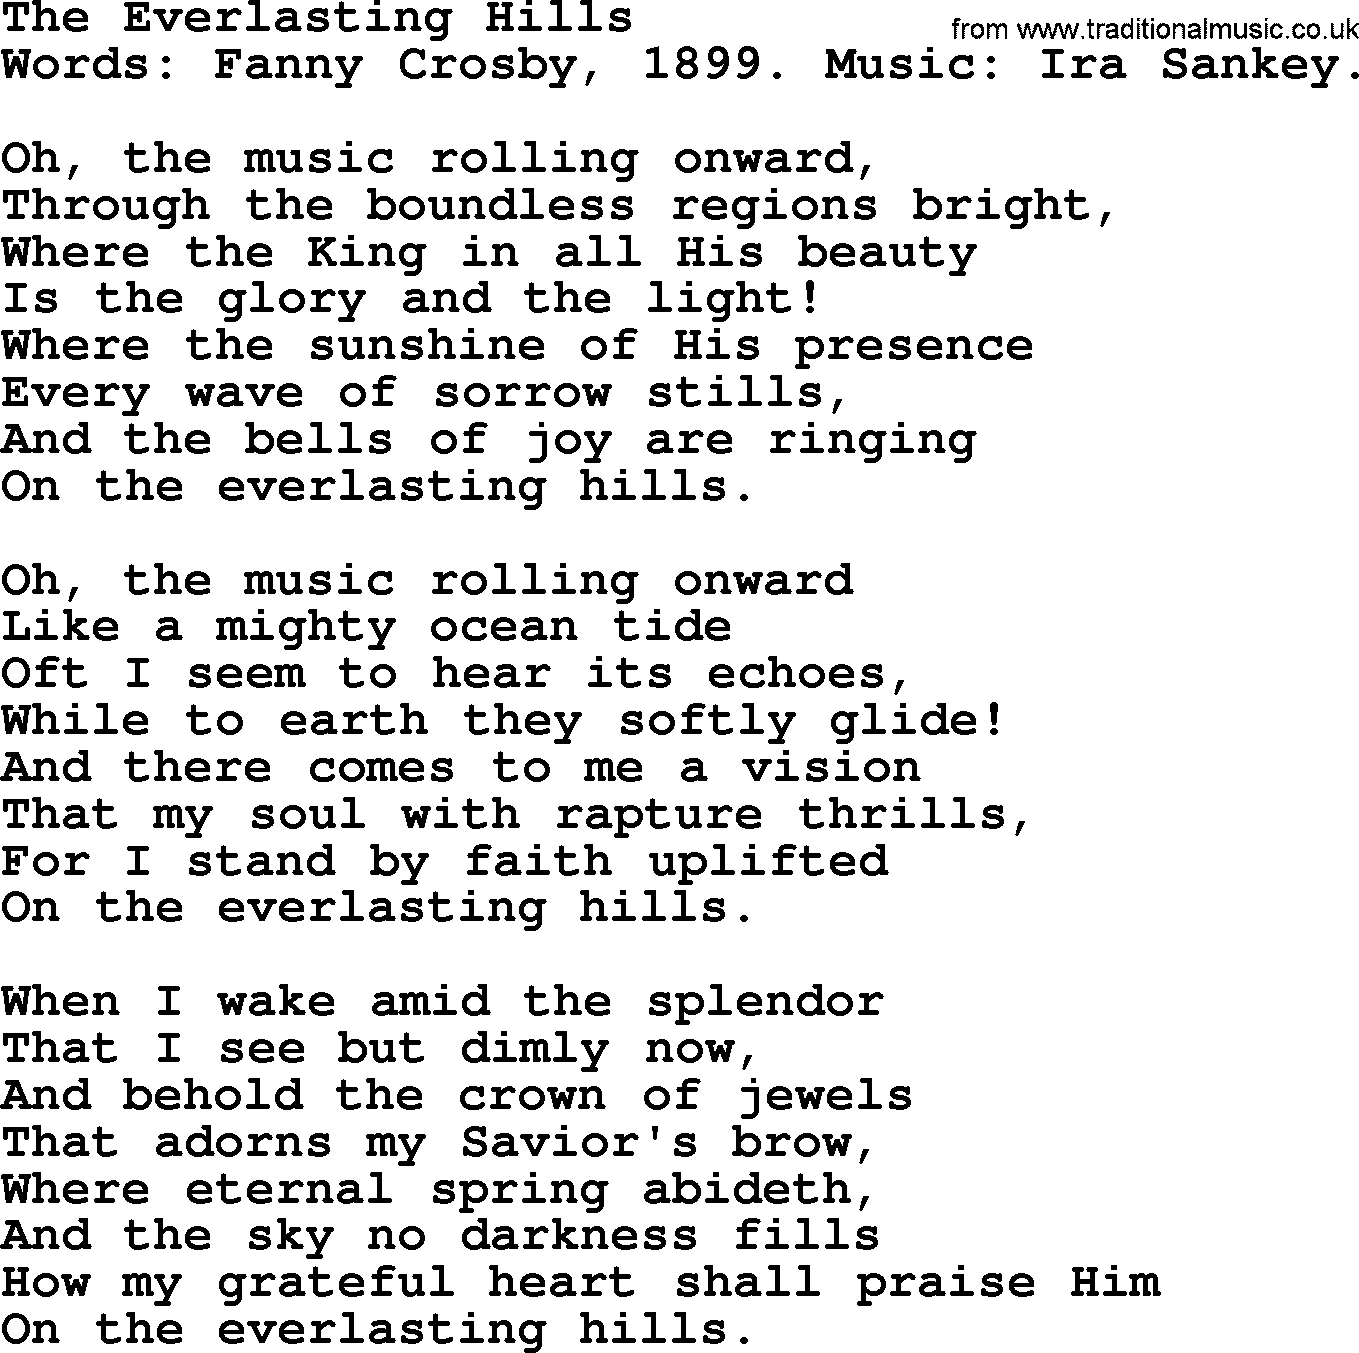 Fanny Crosby song: The Everlasting Hills, lyrics